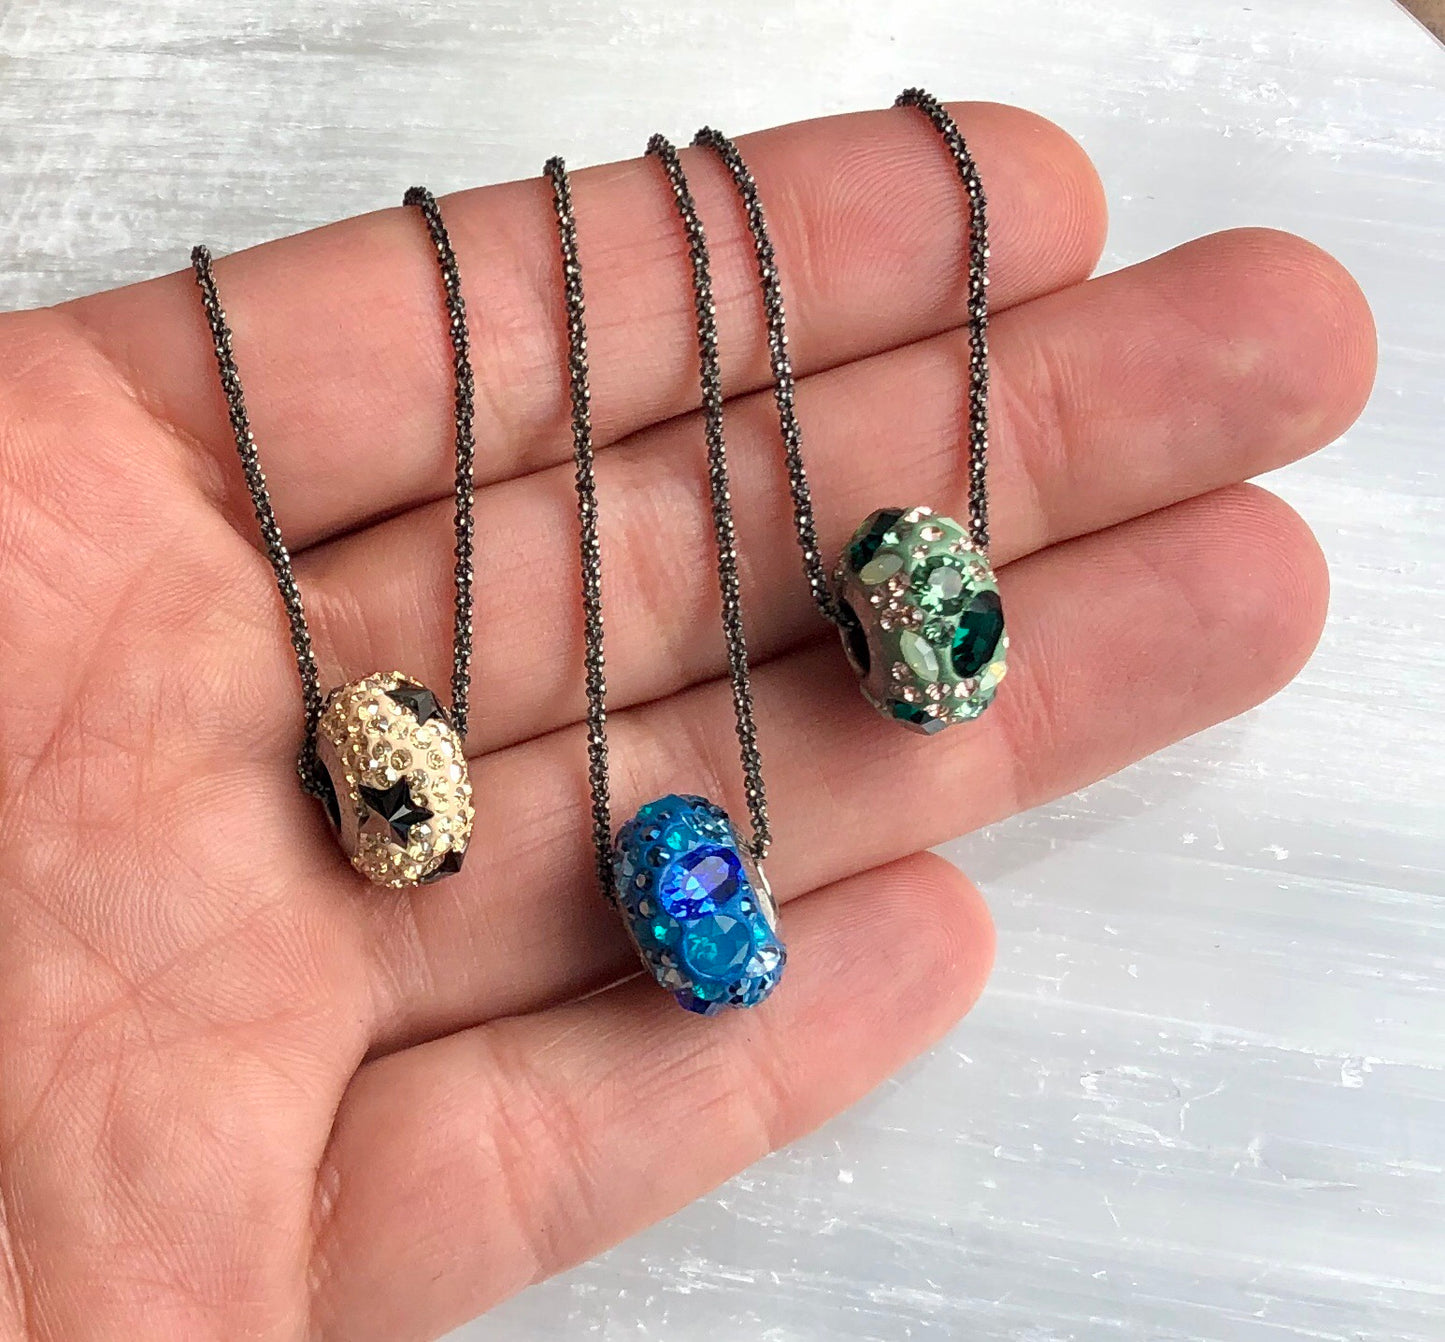 Bermuda Blue Pave Swarovski Crystal Bead Necklace